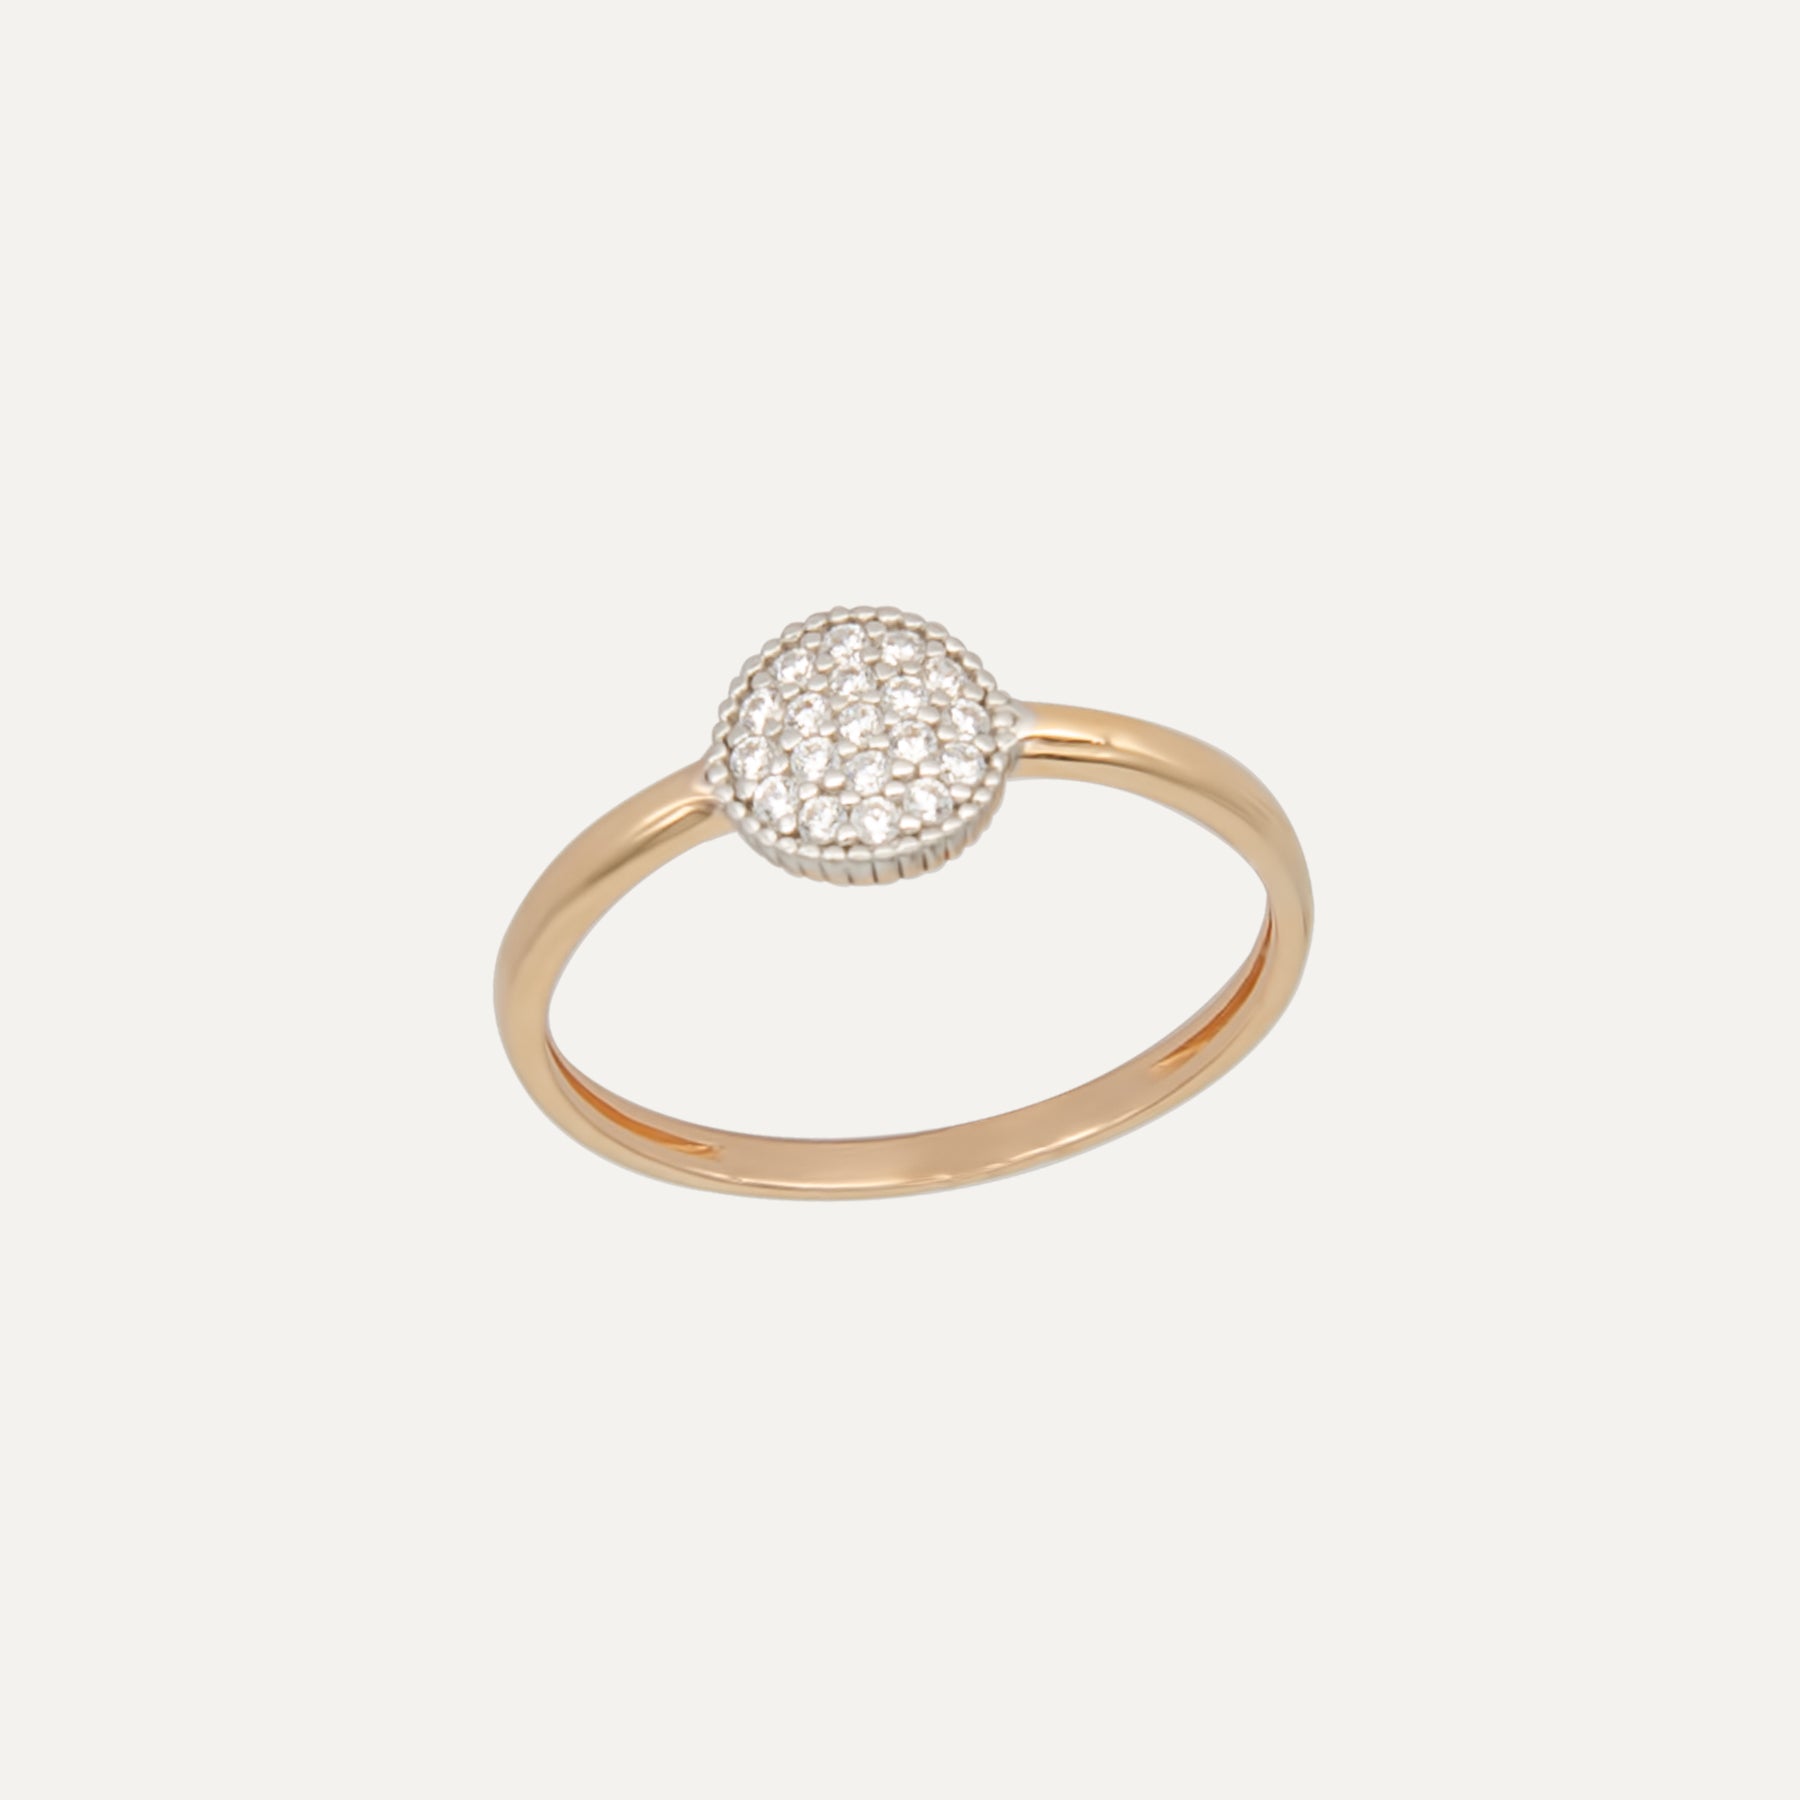 Auksinis žiedas „Apvalus spindesys“